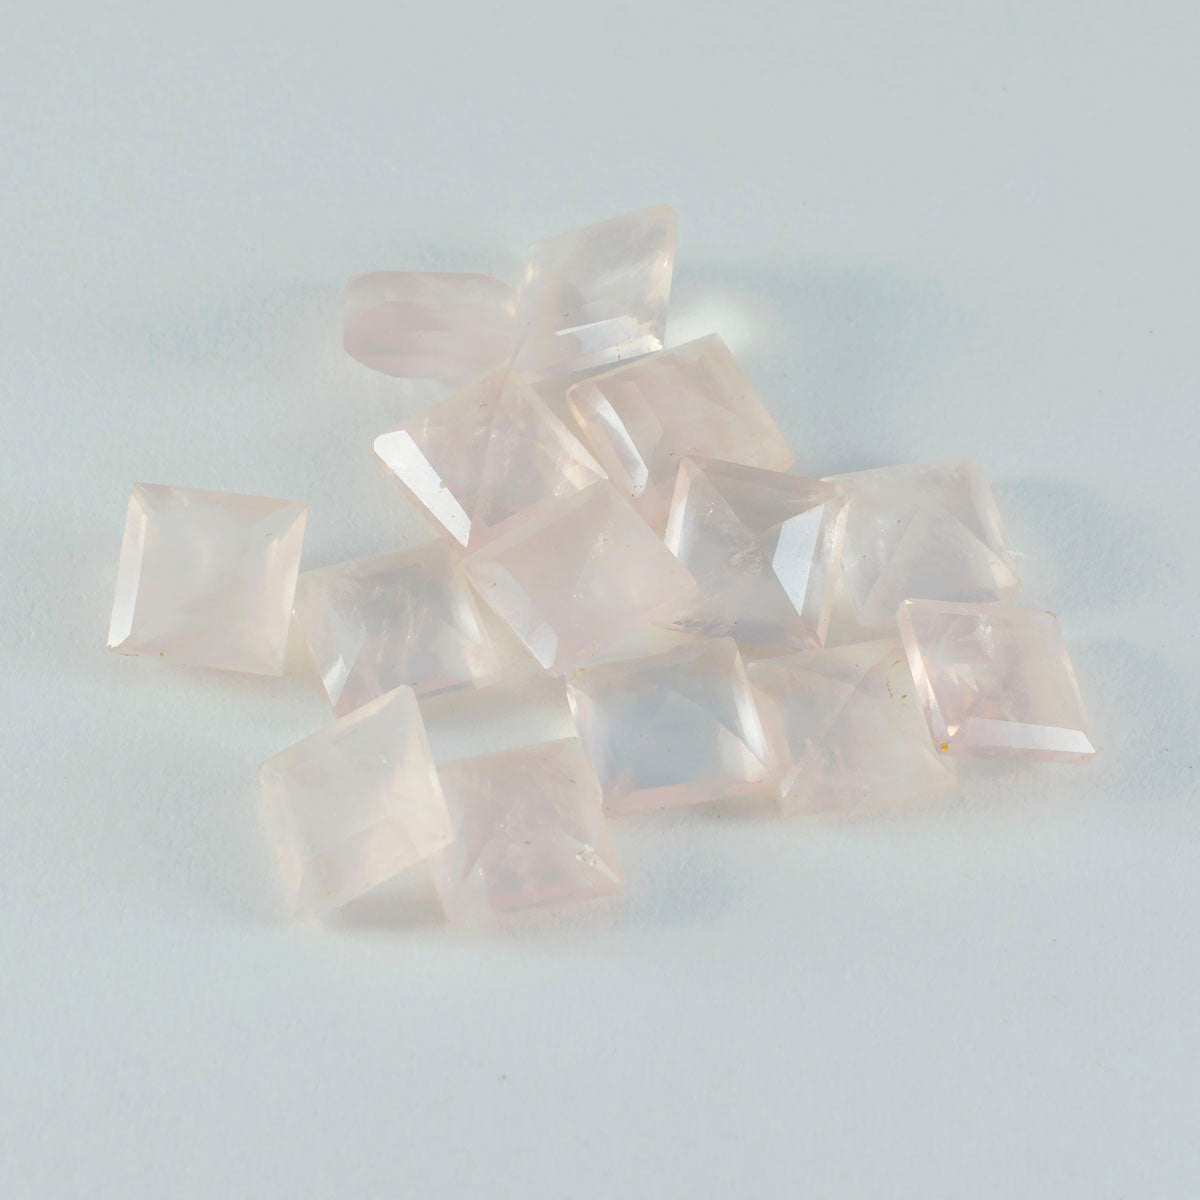 Riyogems 1PC Pink Rose Quartz Faceted 5x5 mm Square Shape astonishing Quality Loose Gemstone